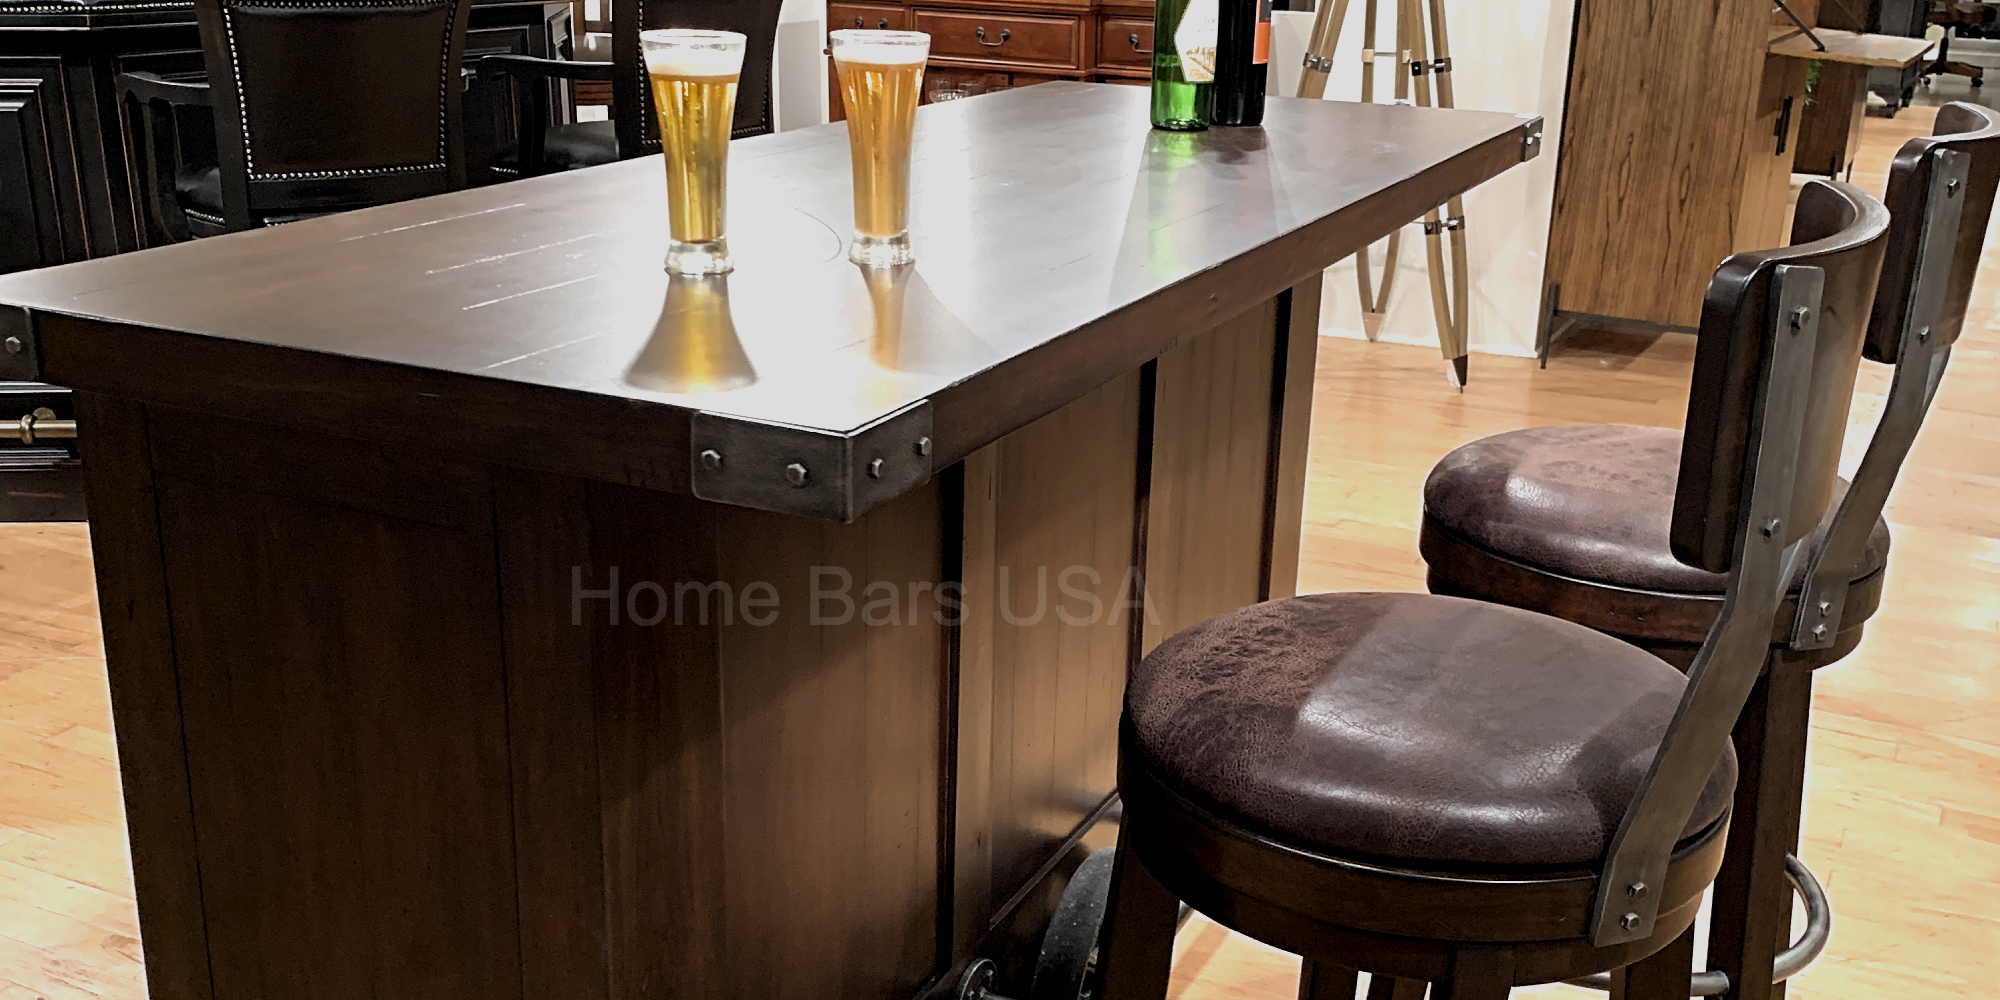 Bar Stools Buyers Guide - Home Bars USA